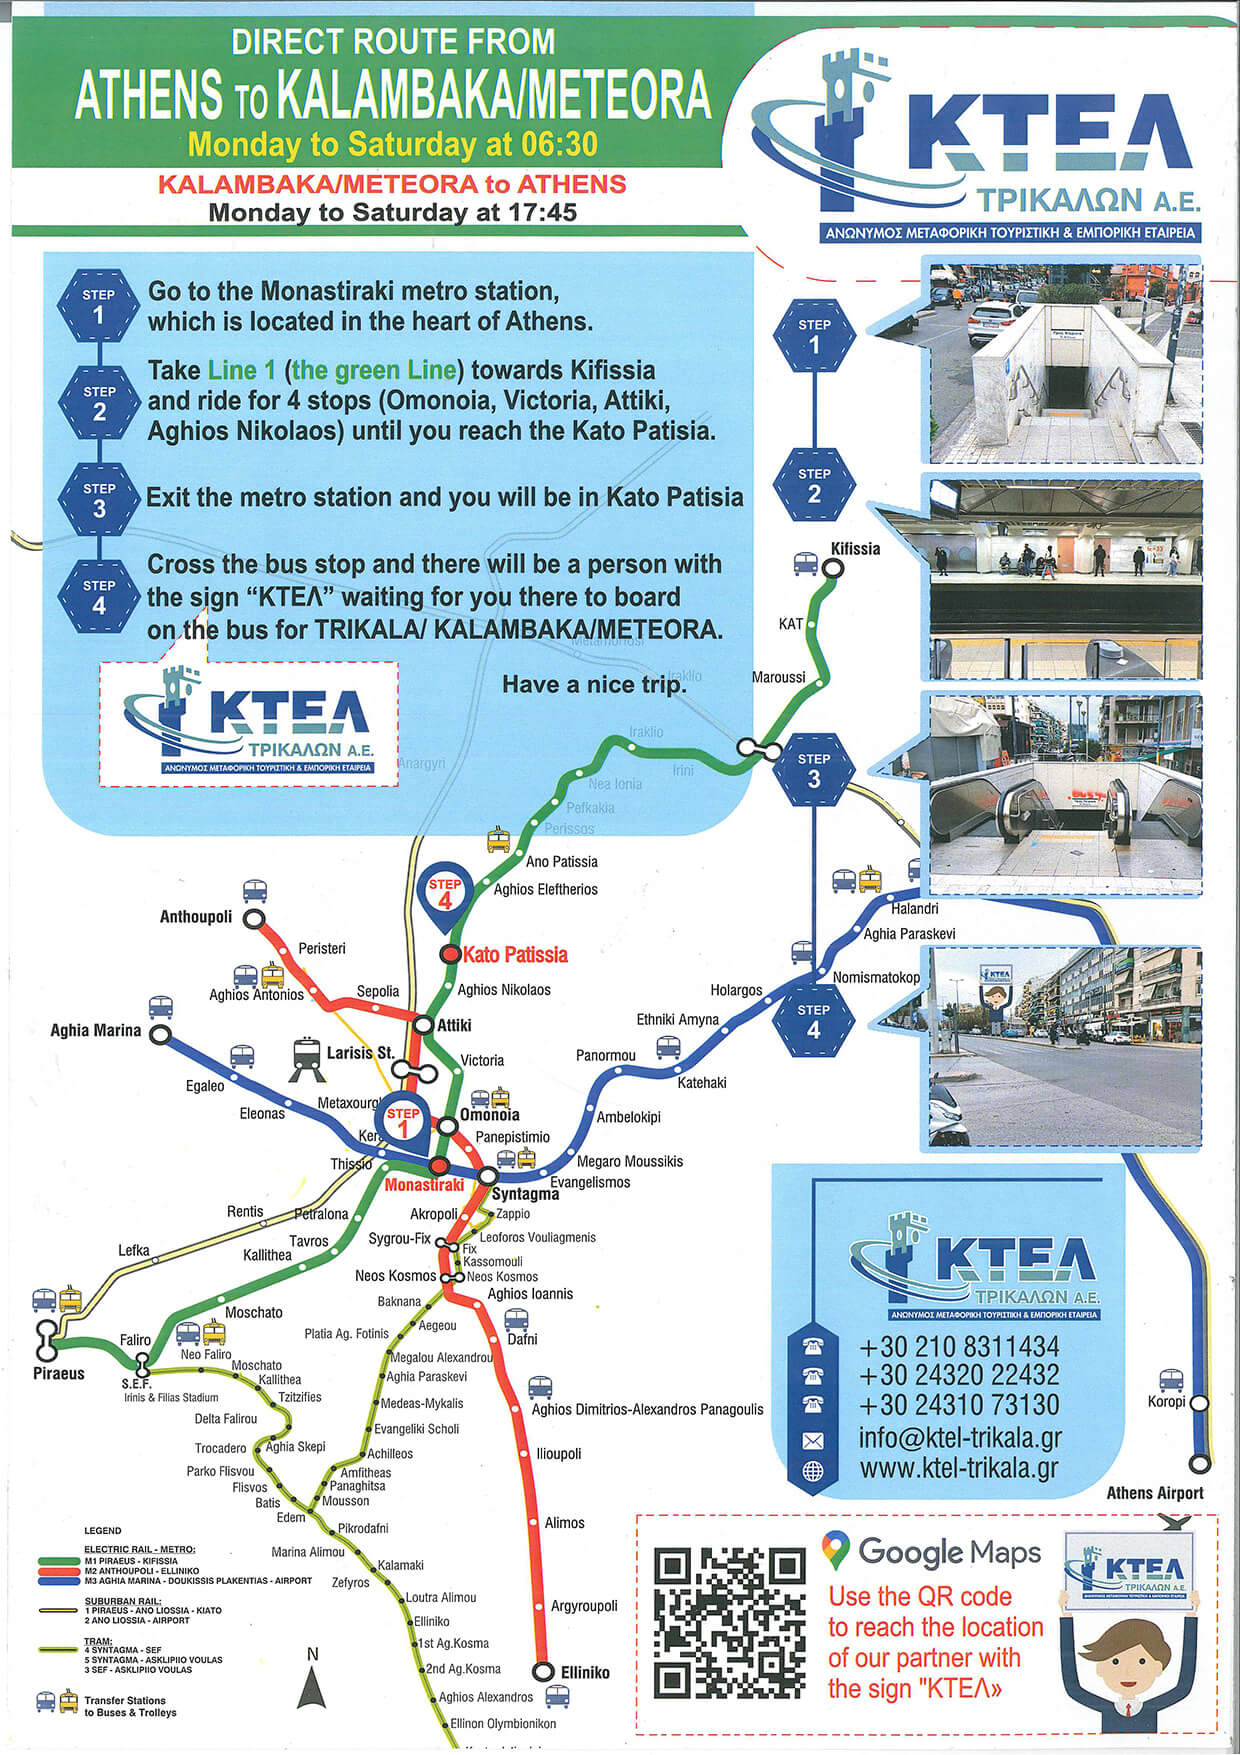 › Direct itinerary from Athens to Kalambaka/Meteora